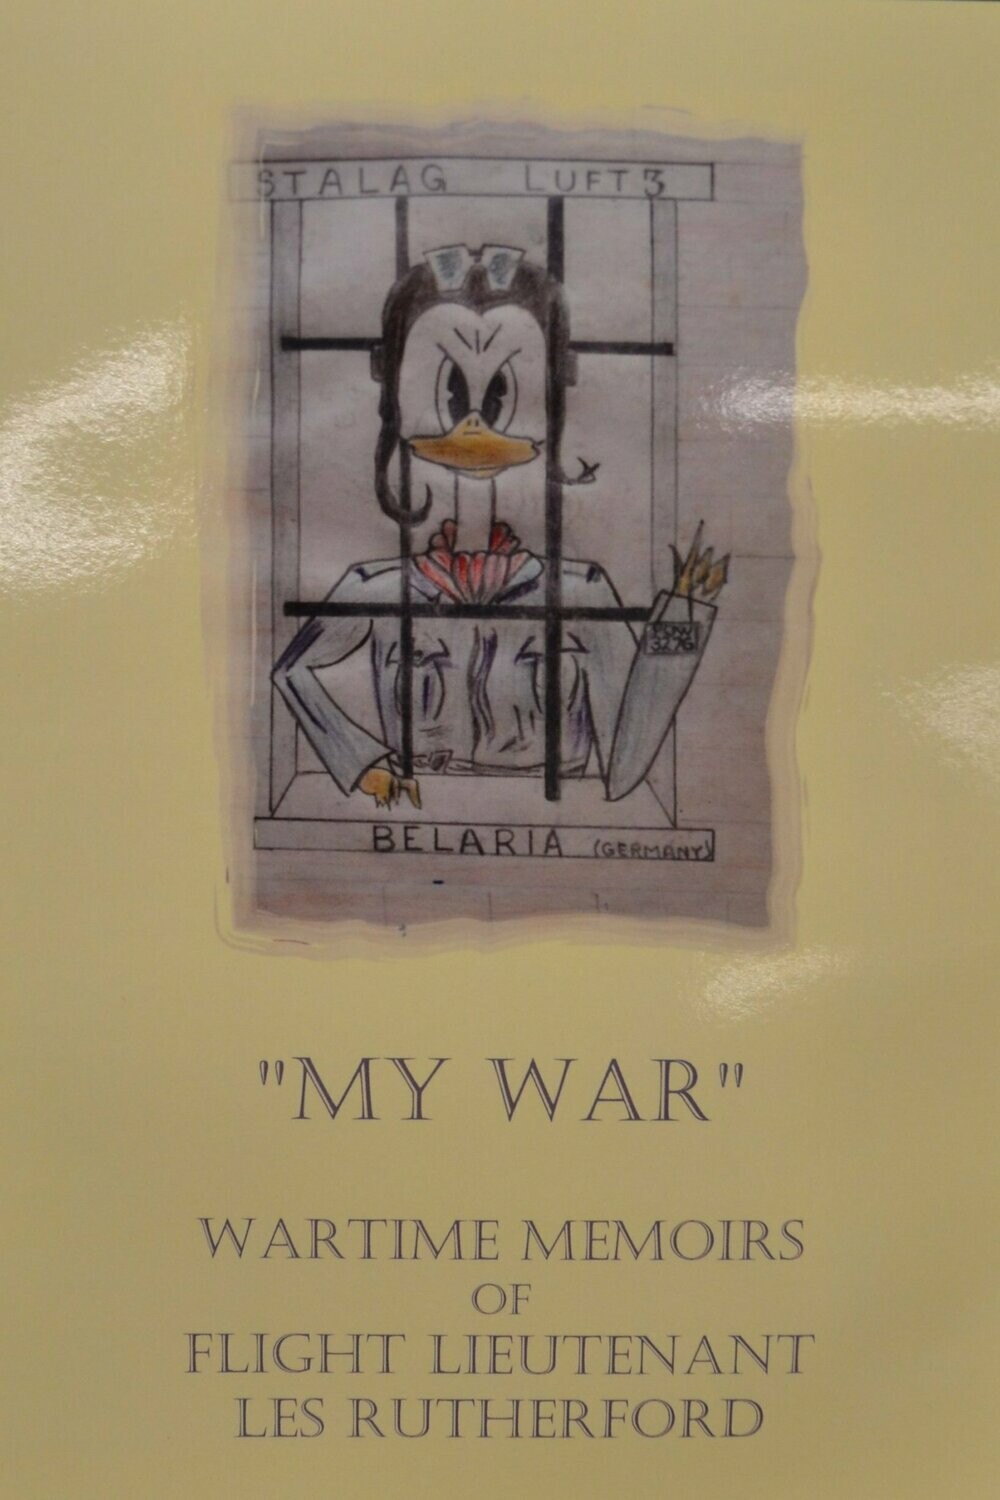 Book - "My War" - Wartime memories of Flt. Lt Les Rutherford